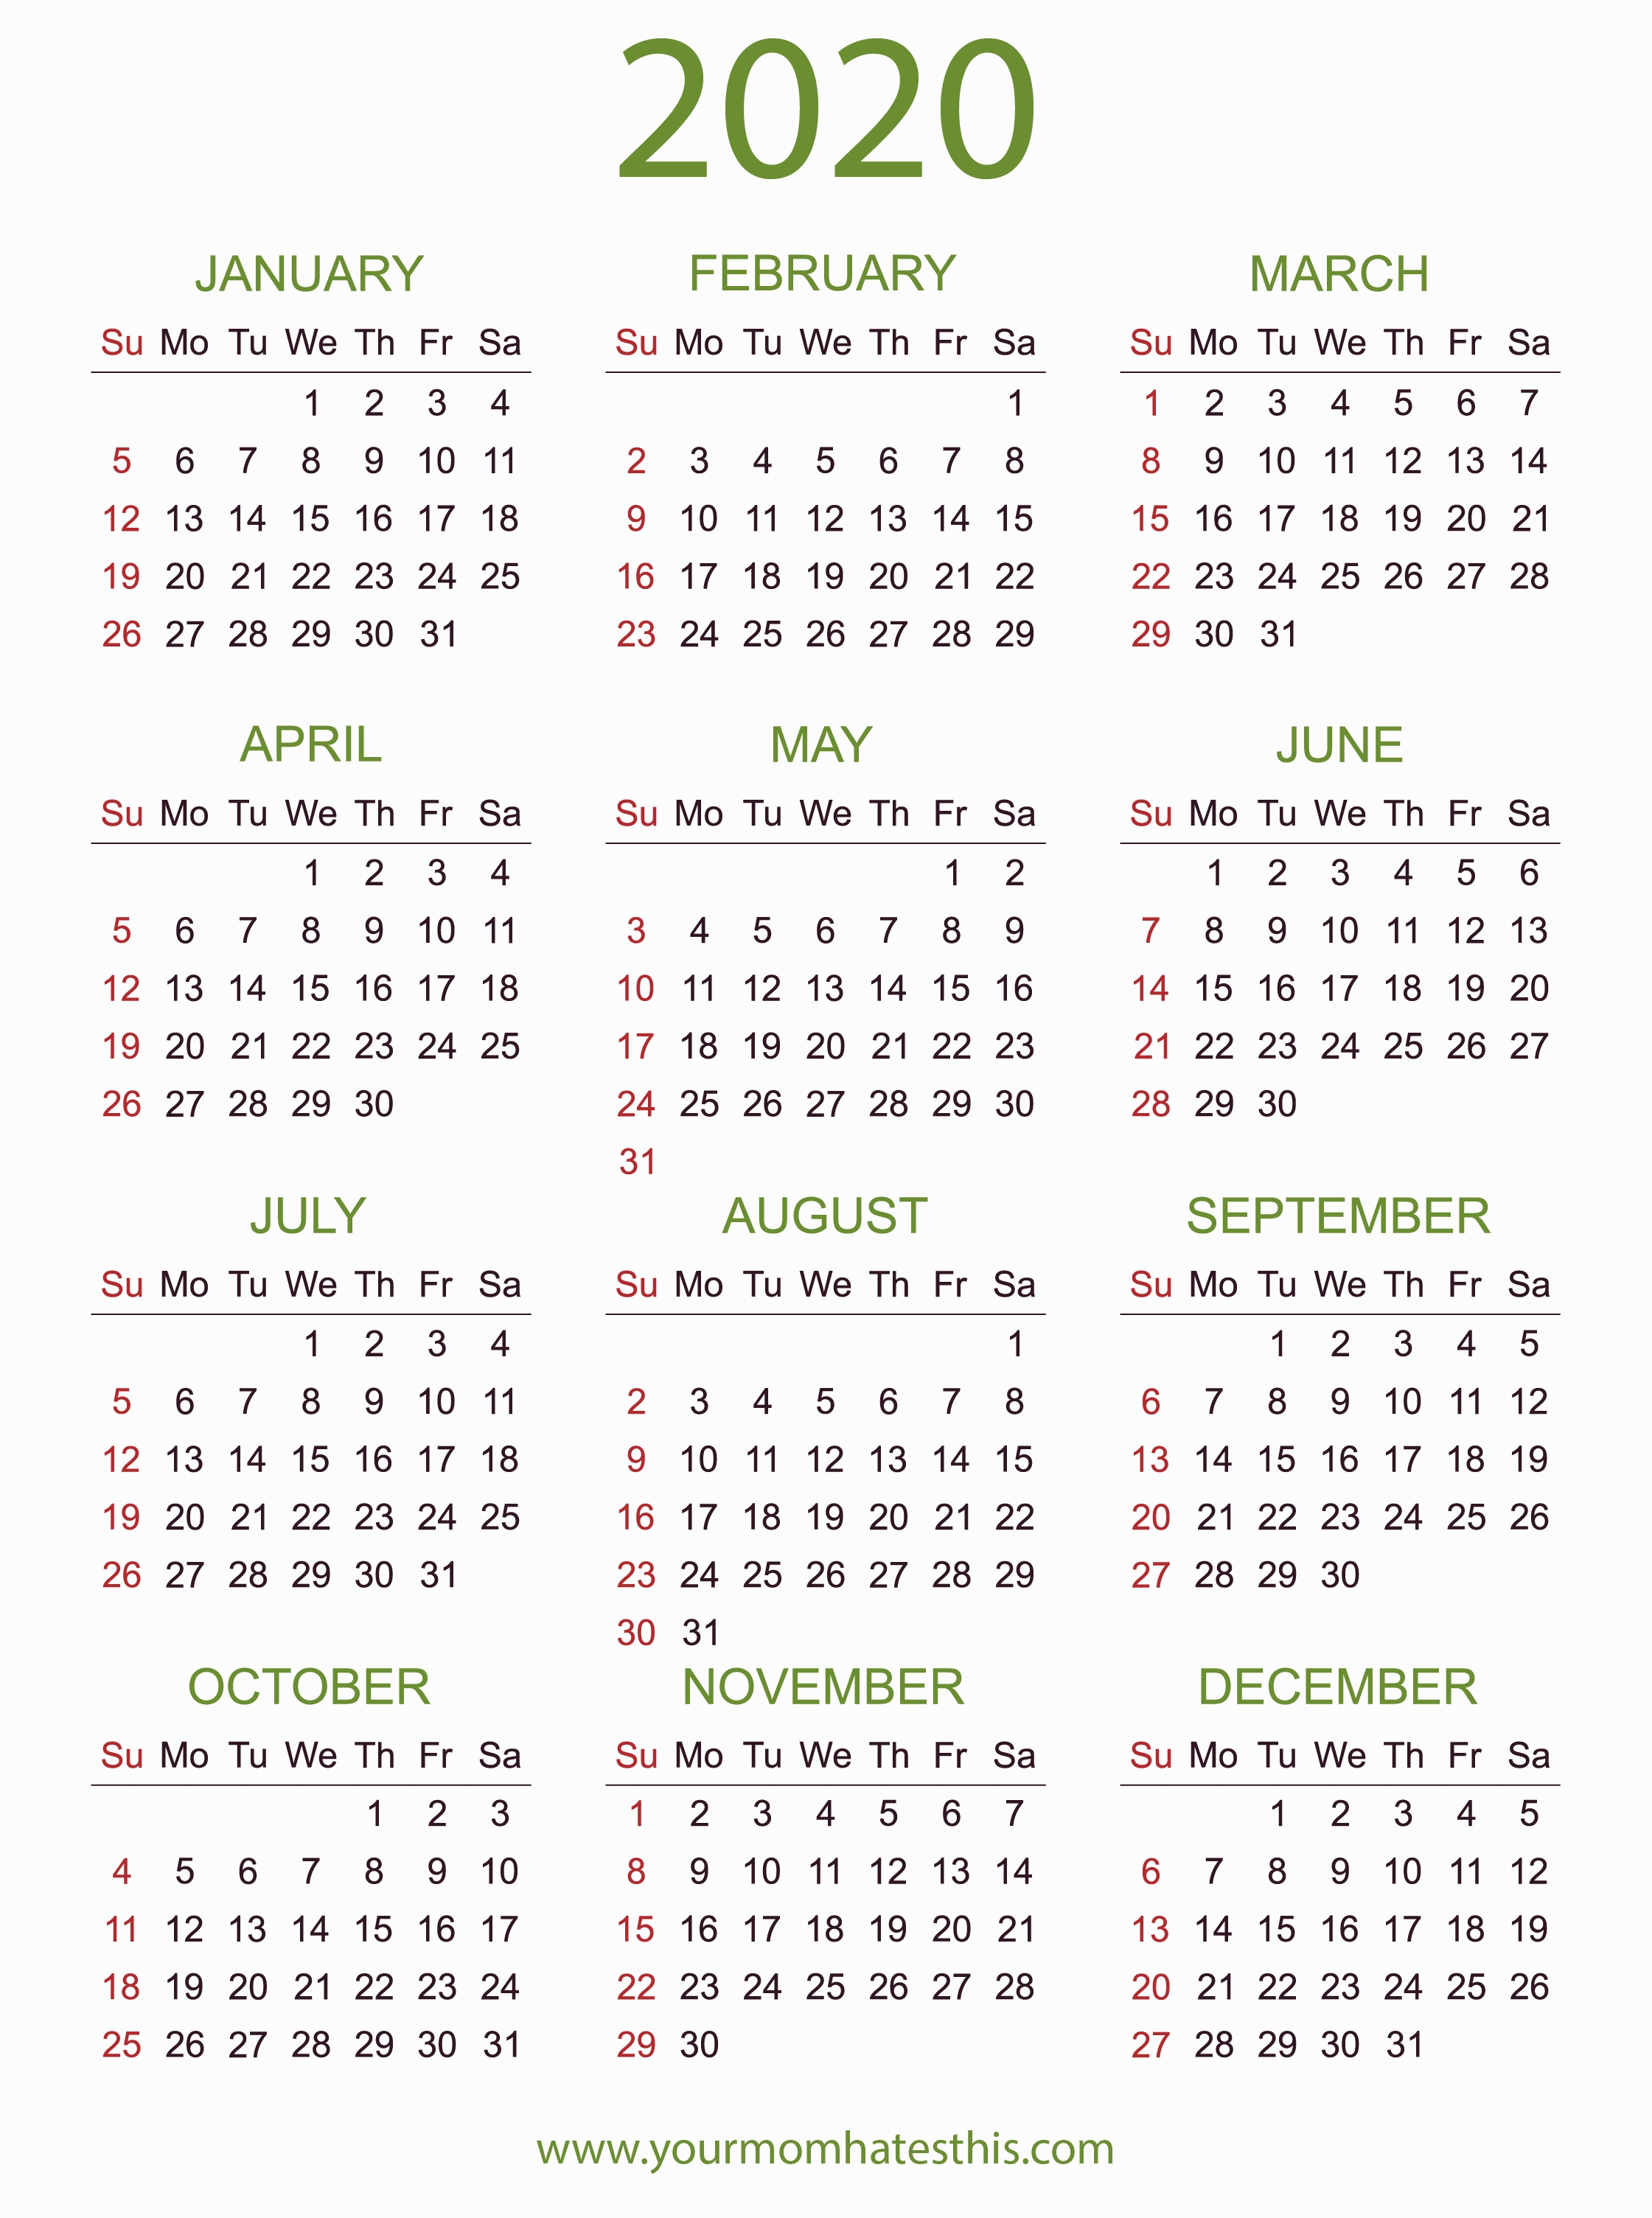 2020 Calendars In Pdf - Download Templates Of Calendar 2020-Sa 2020 Calendar With Holidays